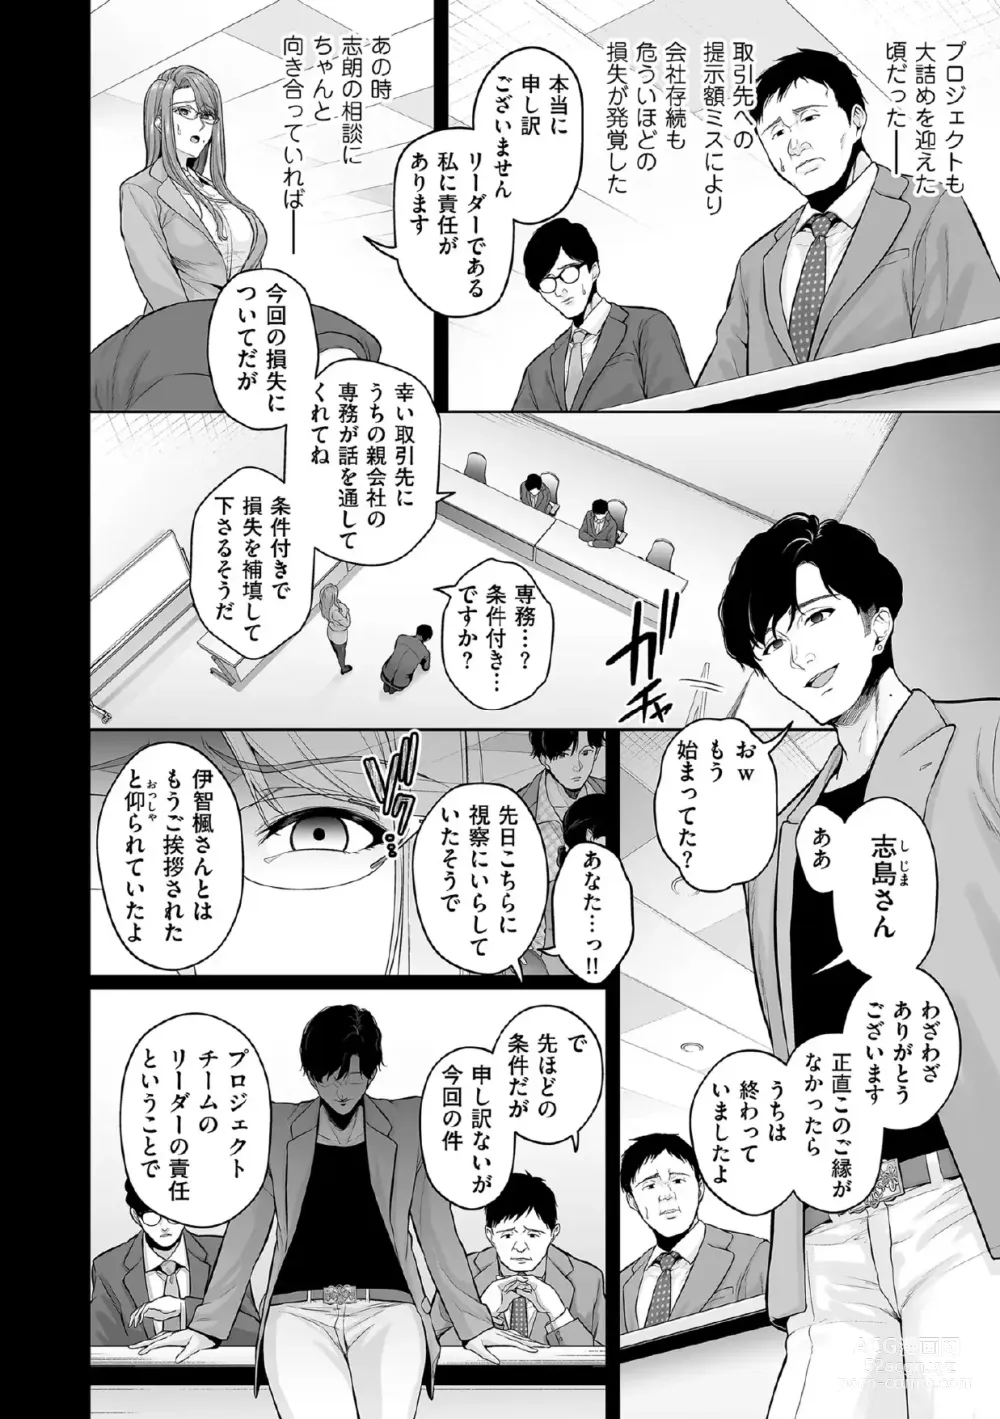 Page 6 of manga 本性 chapter 01-03